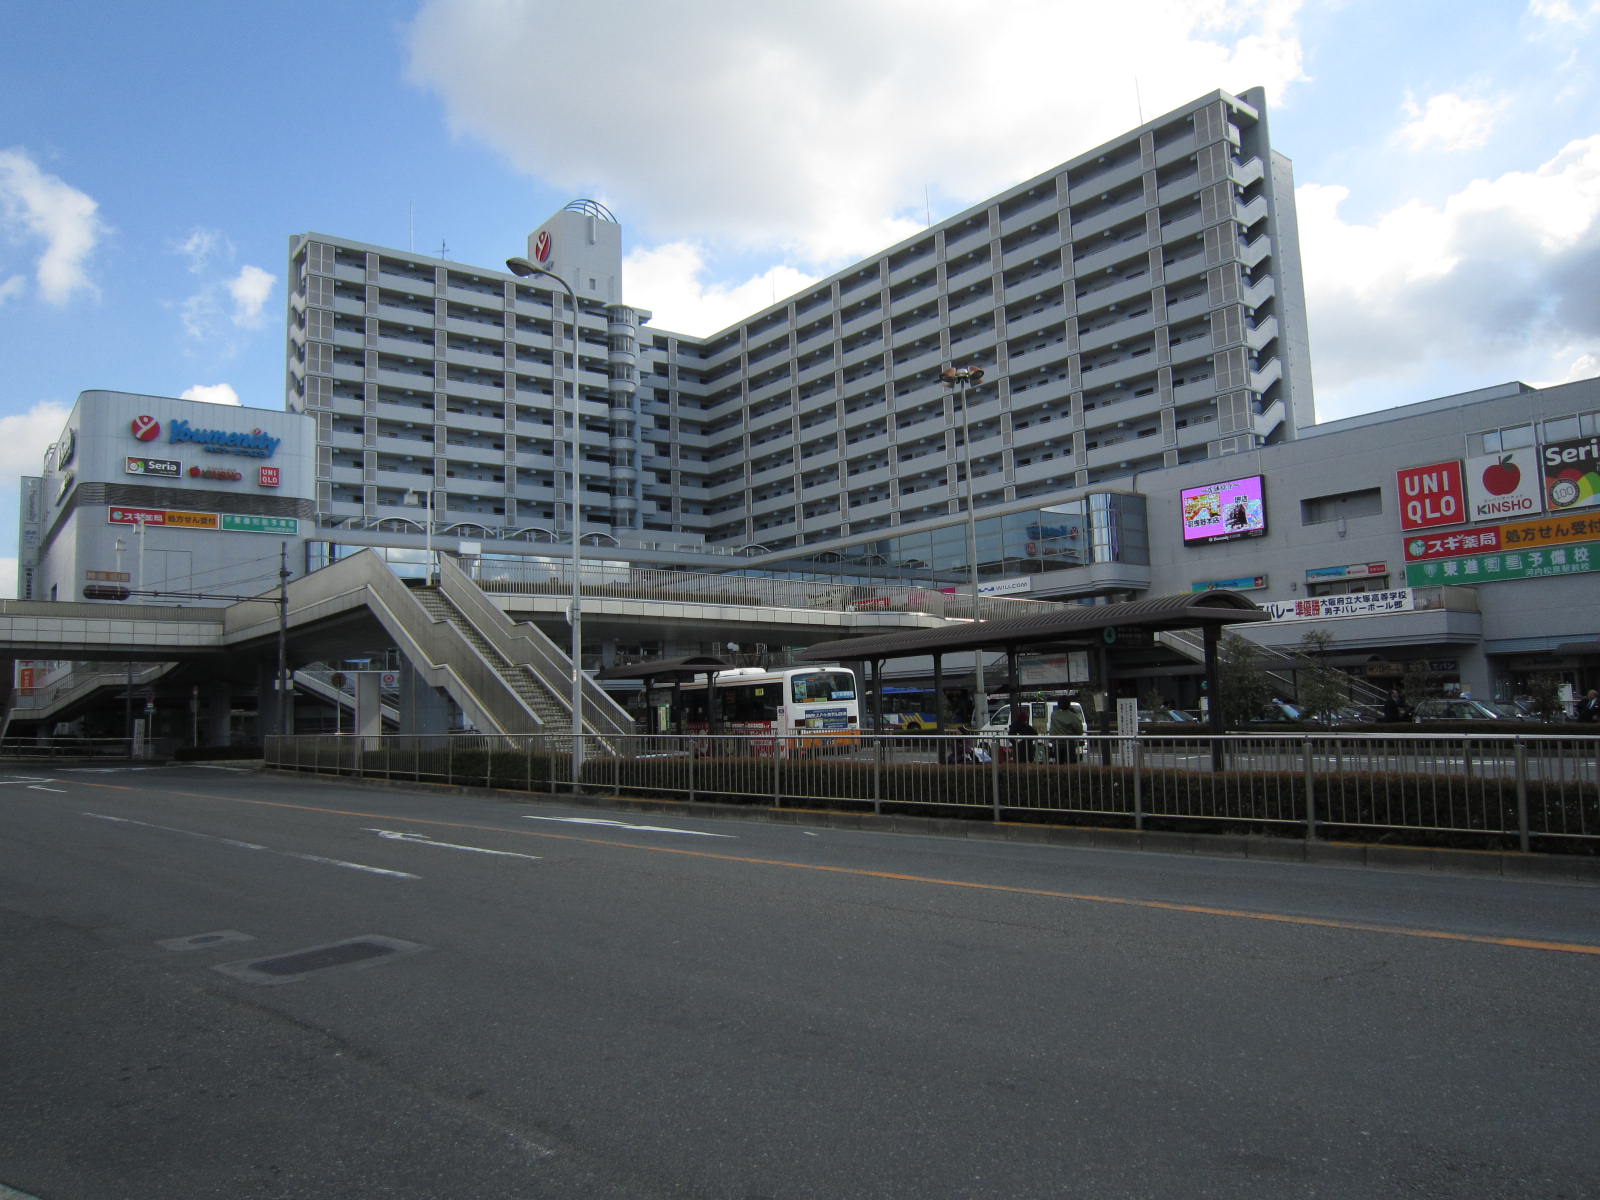 Shopping centre. Dream 1655m until sanity Matsubara (shopping center)